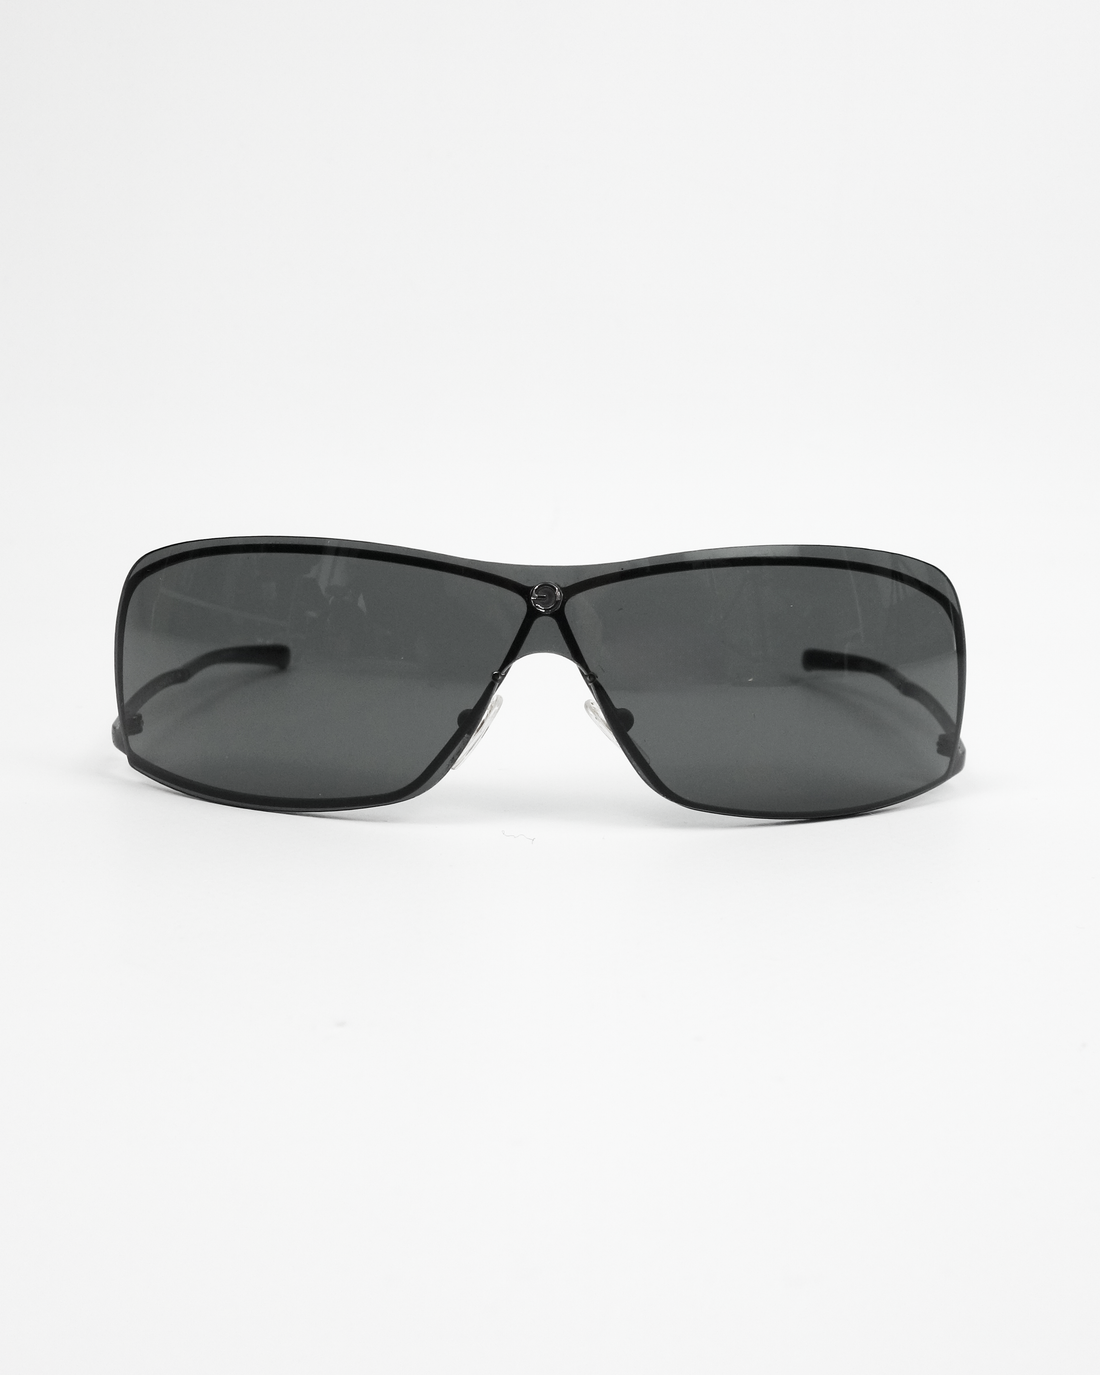 Gucci Black Aluminium Sunglasses 2000's